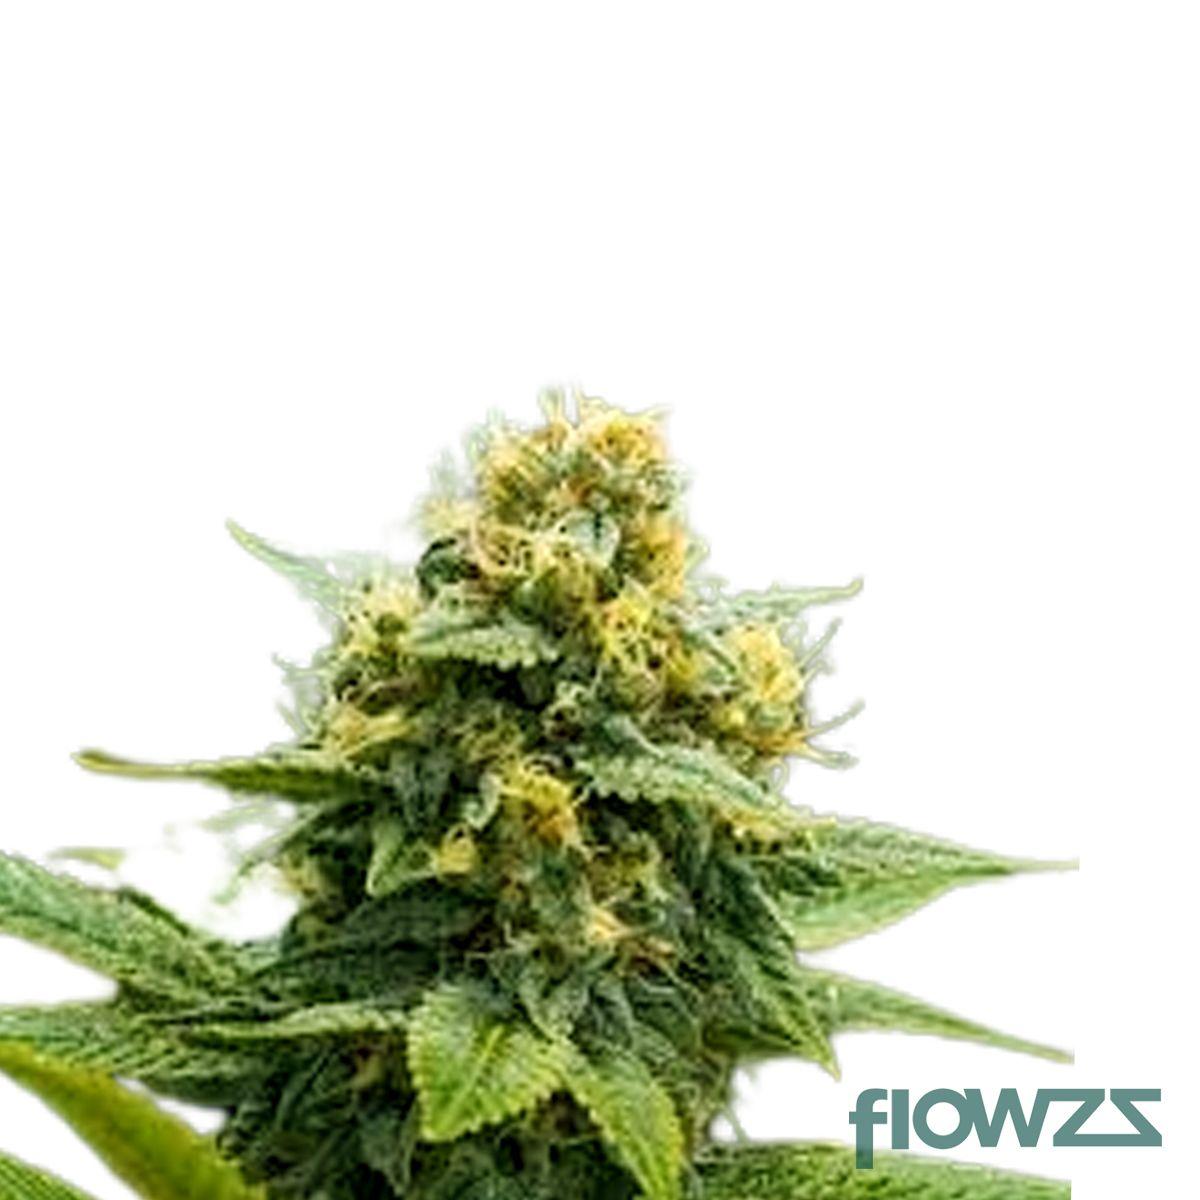 Arequipe Kush  Cannabis Strain - flowzz.com Preisvergleich